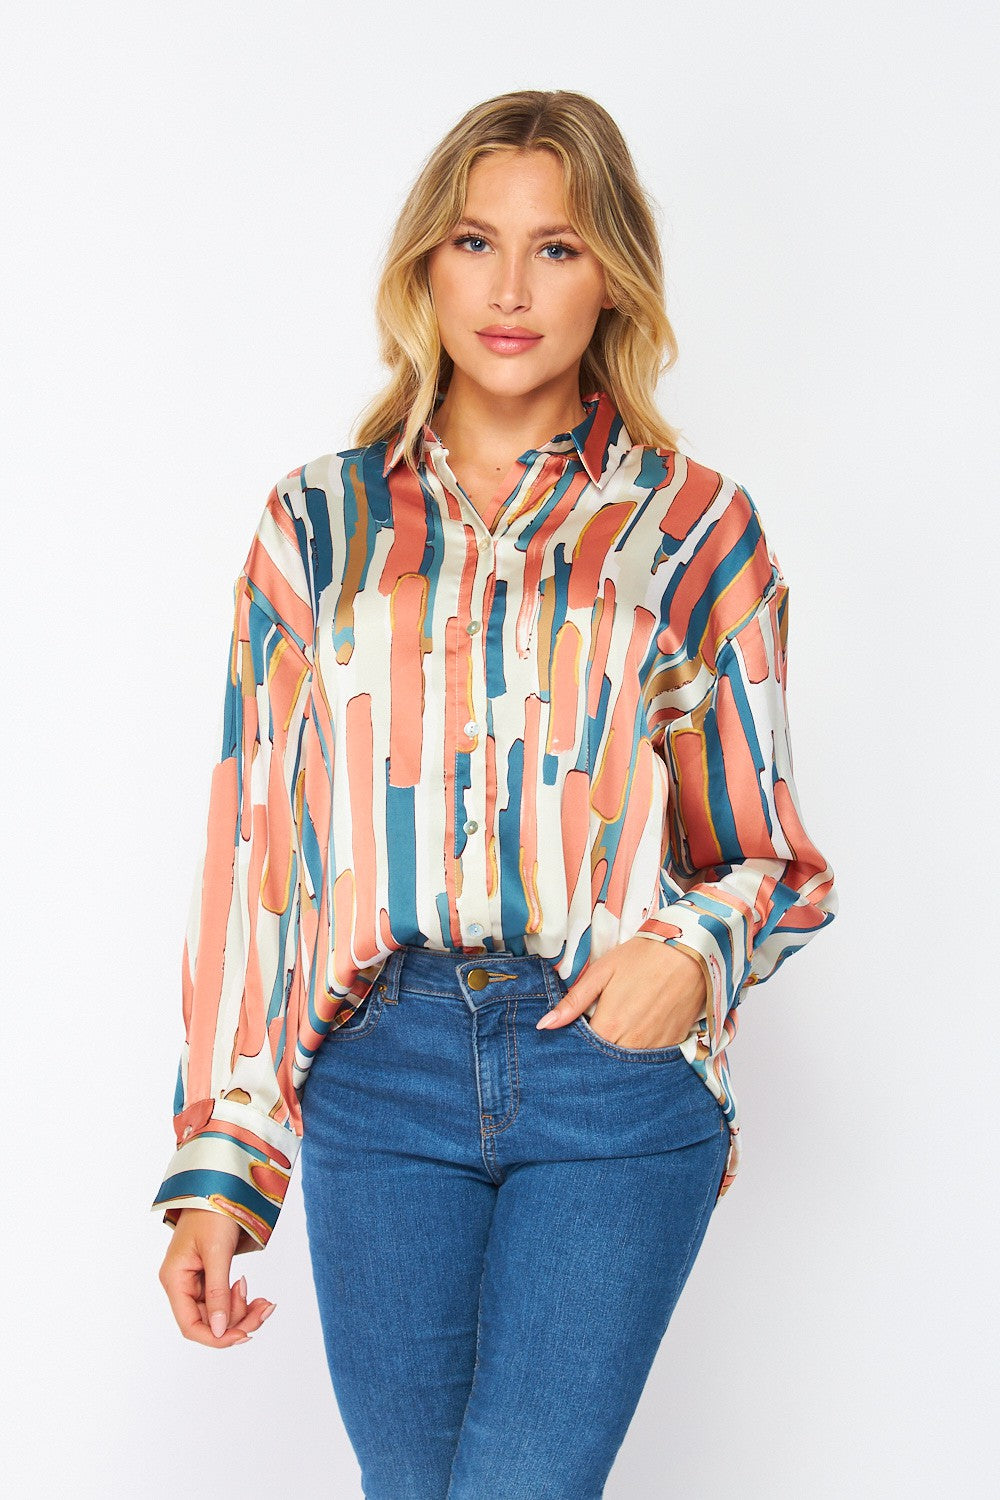 Coral satin blouse